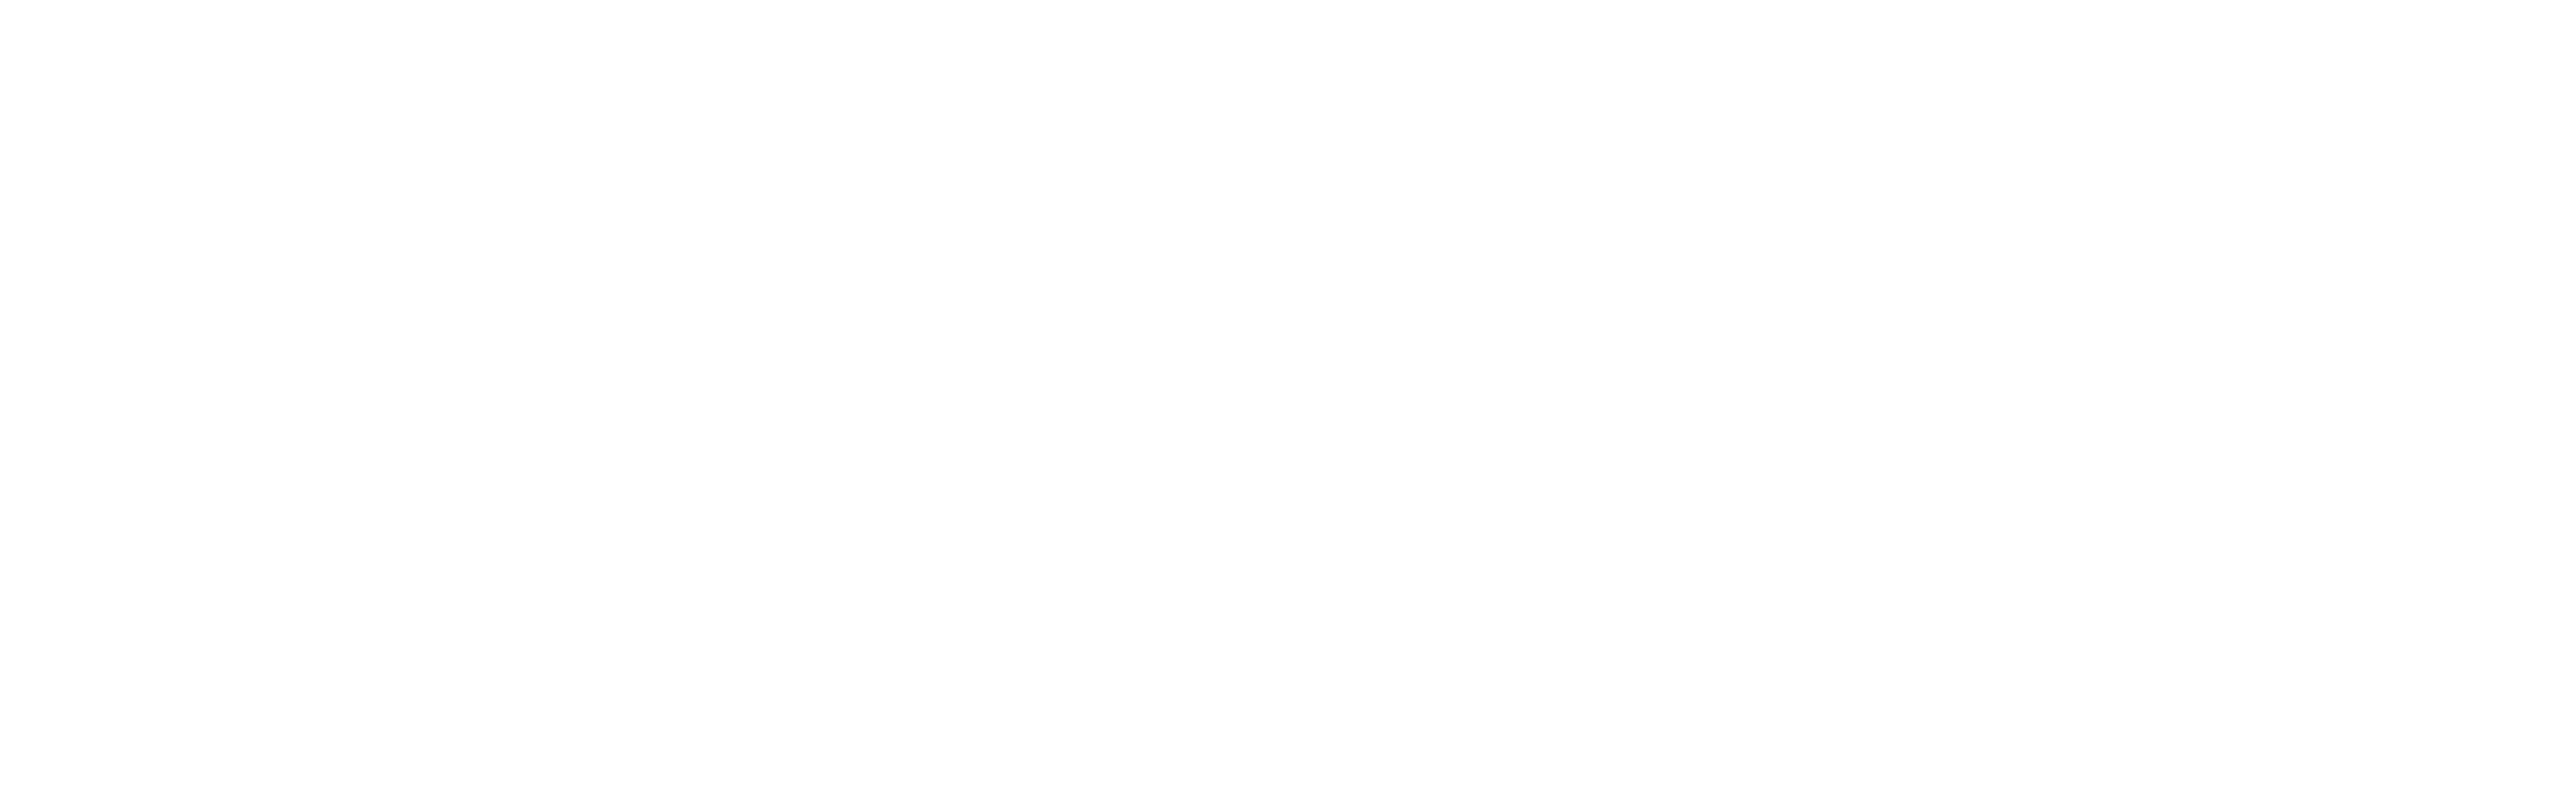 First Baptist Dallas iCampus